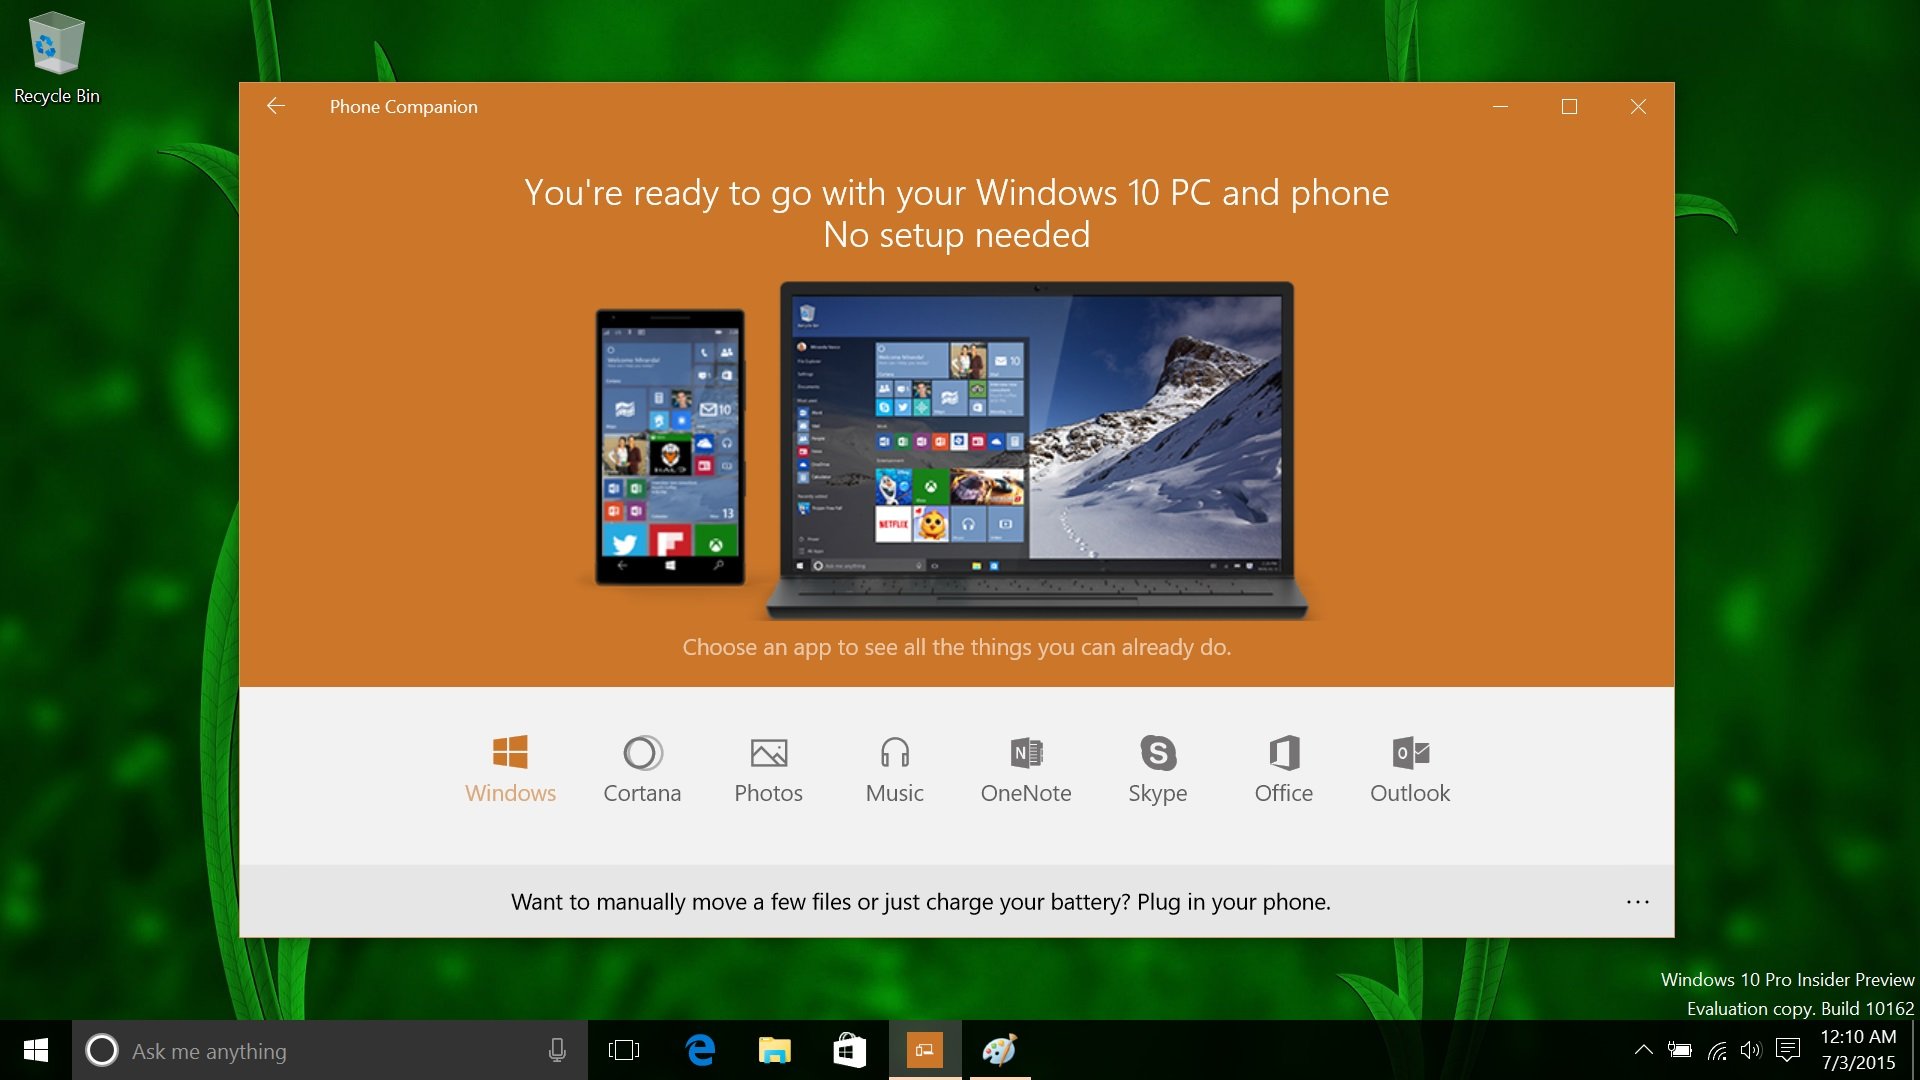 Phone Companion in Windows 10